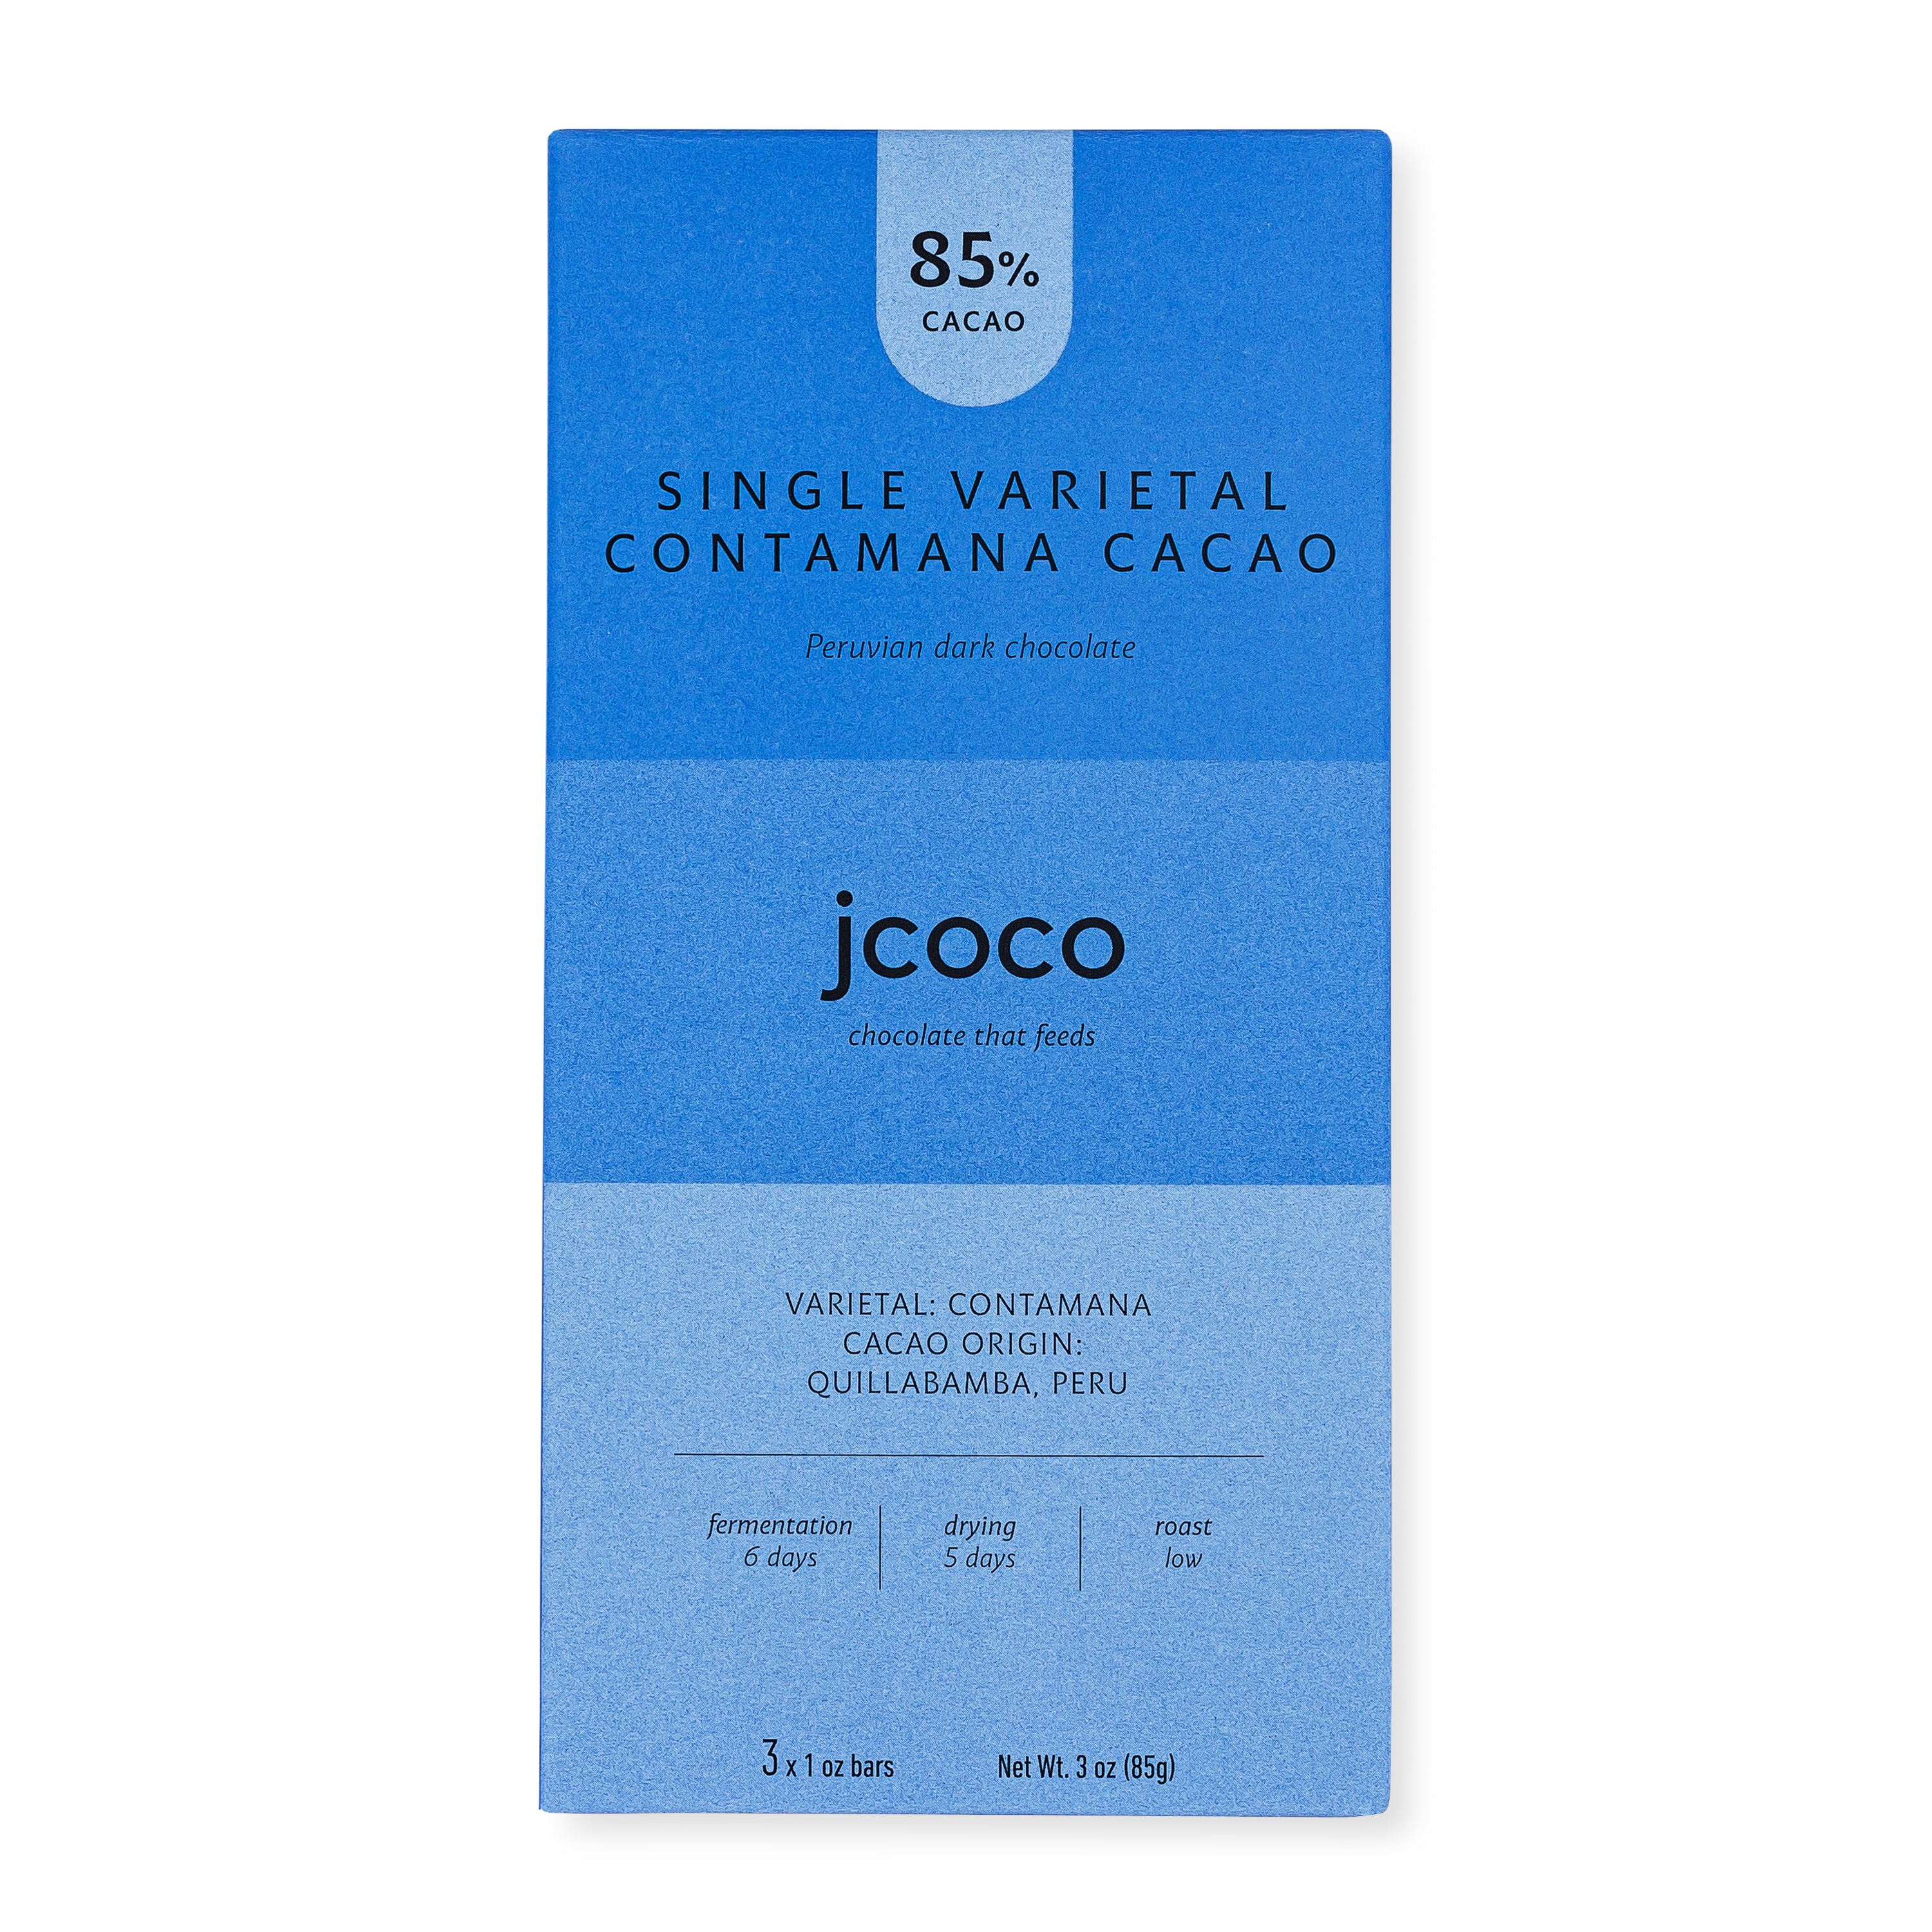 Single Varietal Contamana Cacao